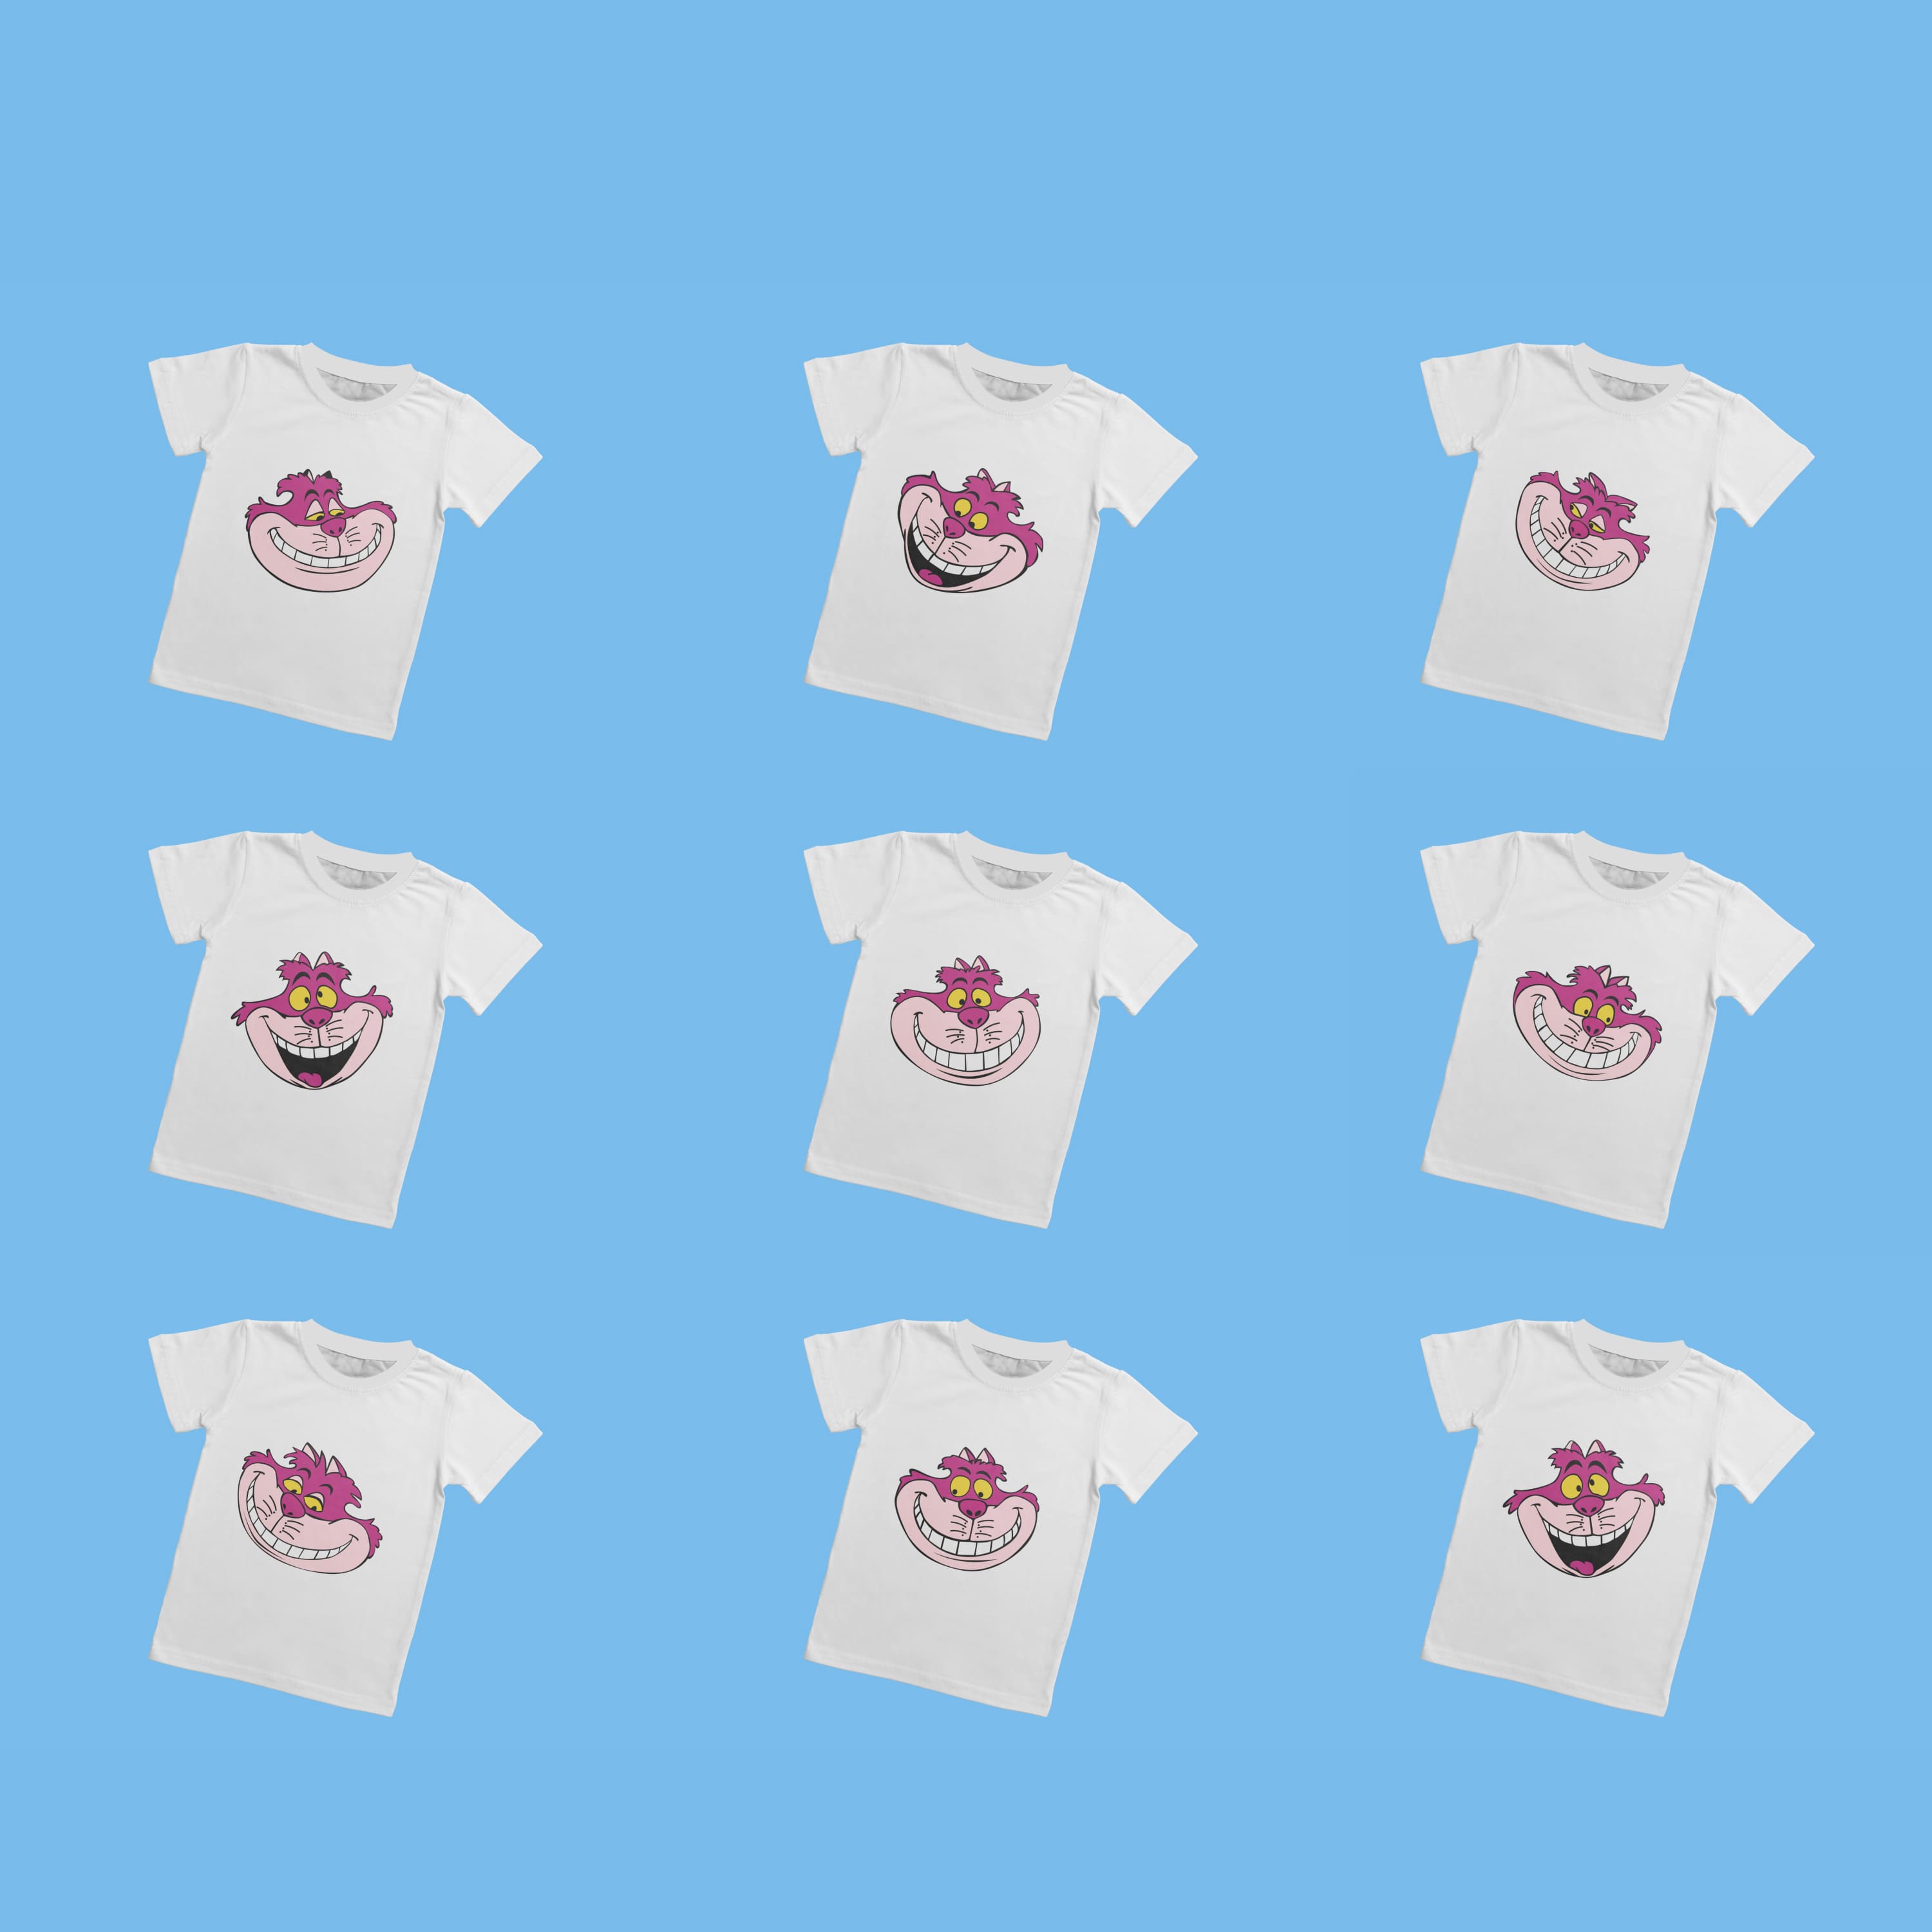 Cheshire Cat Face T-shirt Designs Bundle Cover.